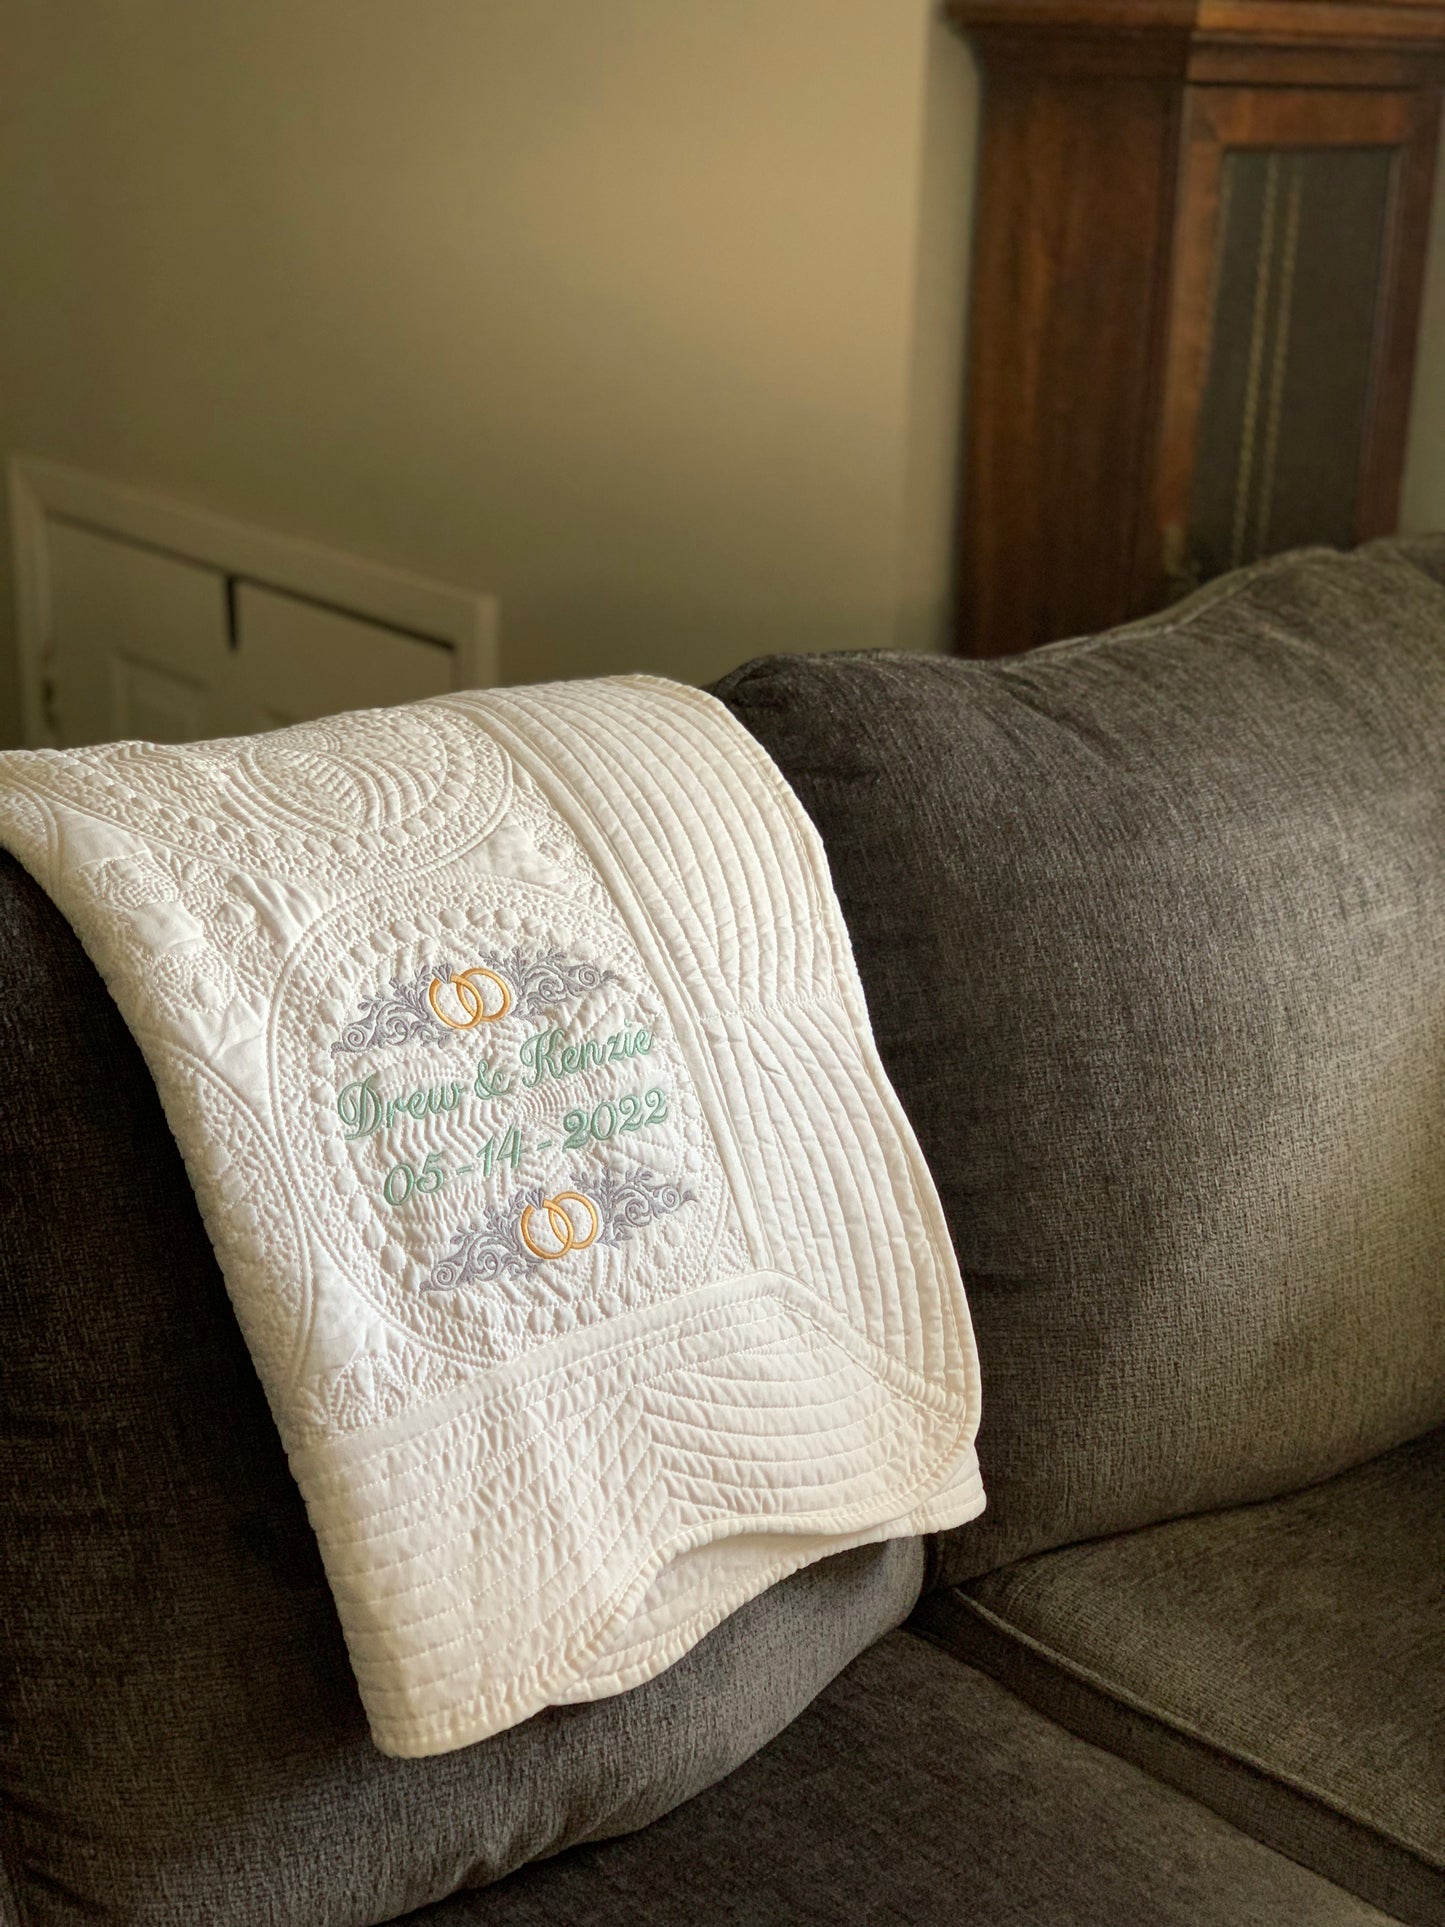 Wedding Anniversary White Lap Quilt - Custom embroidery